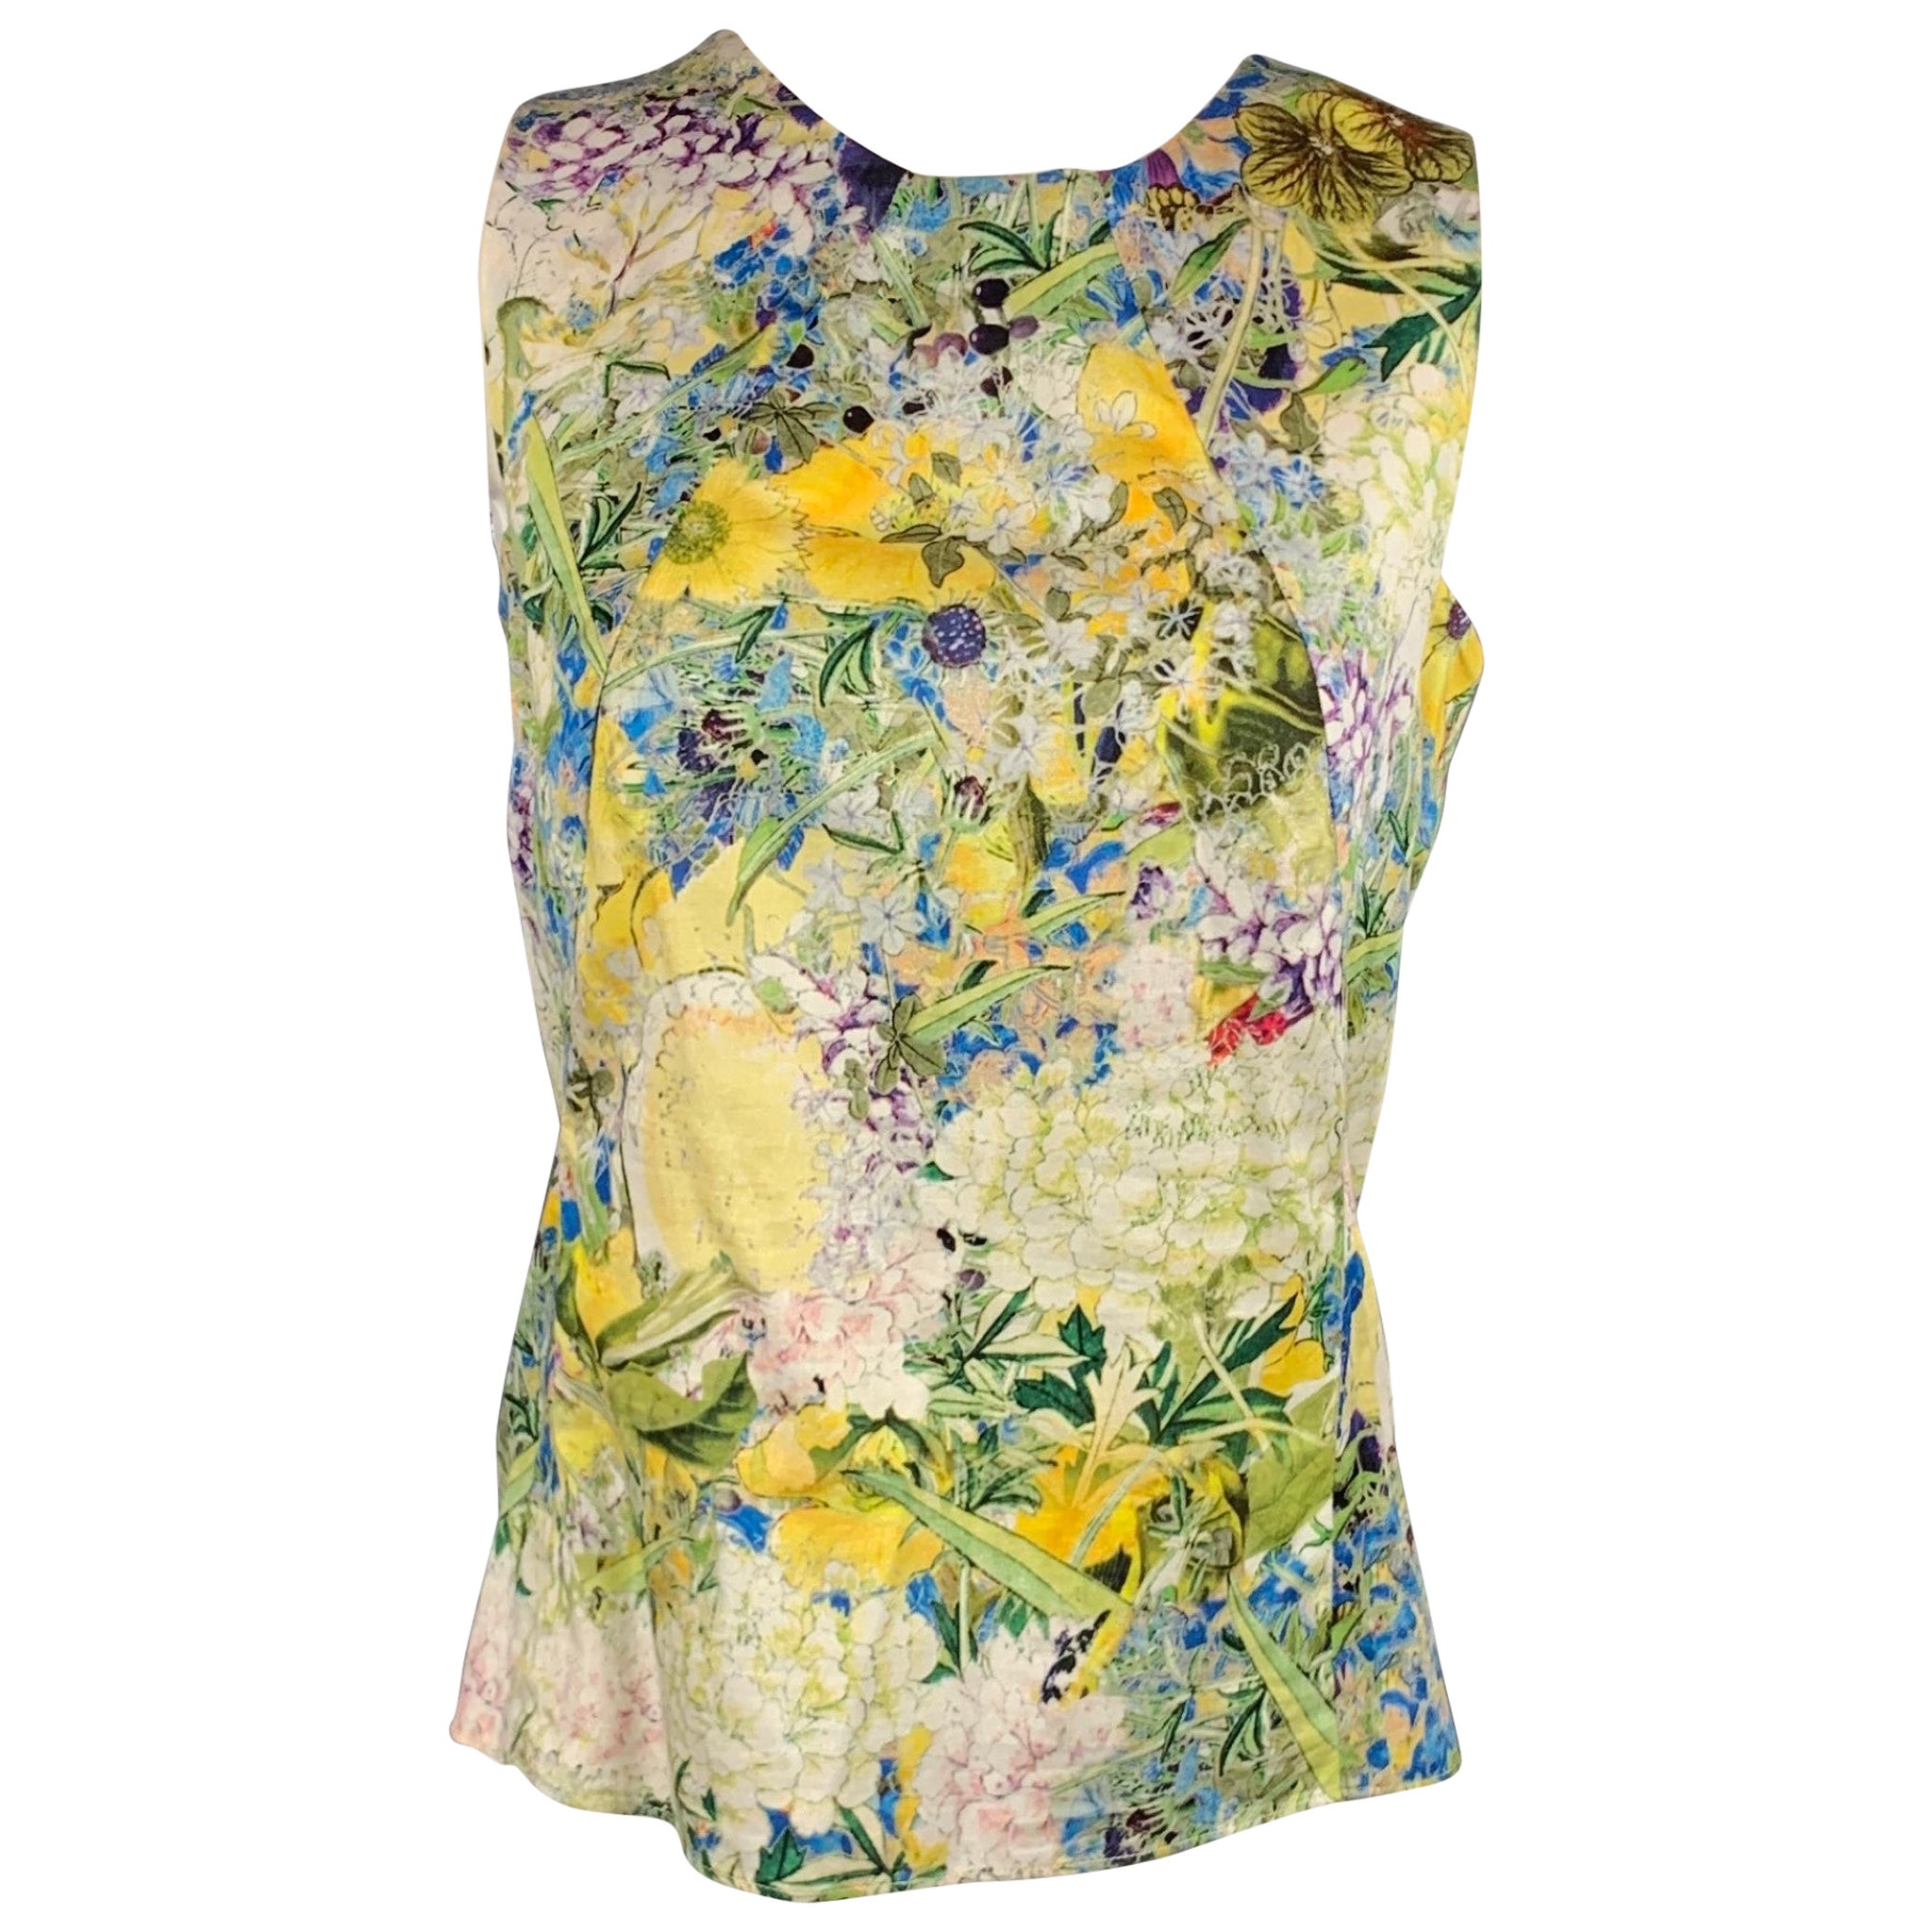 ERDEM Size 4 Green & Yellow Floral Cotton Sleeveless Blouse